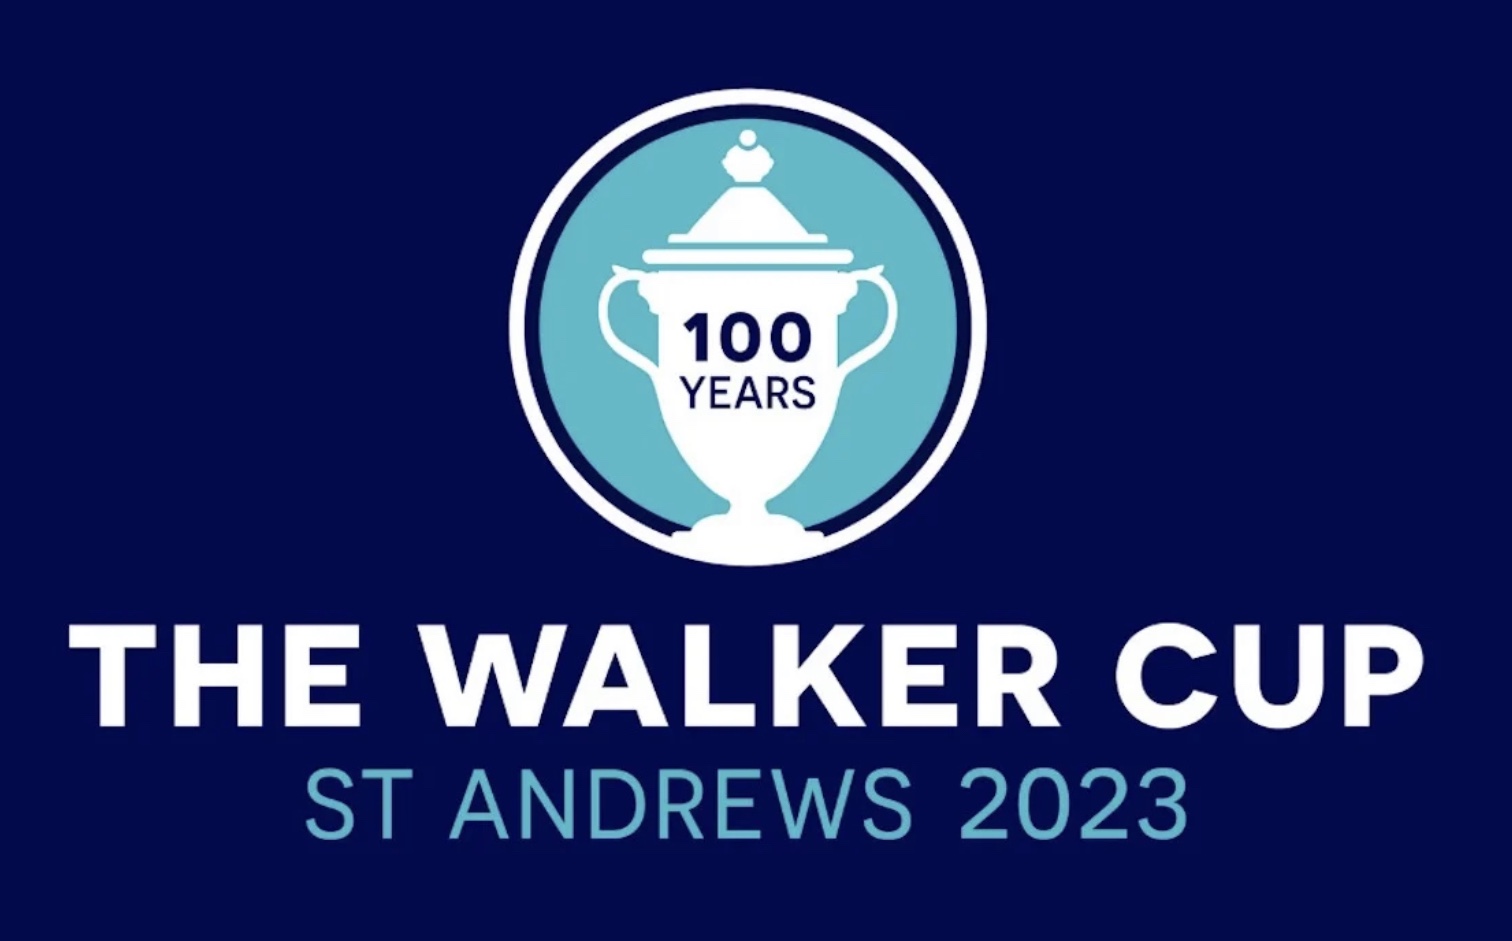 St Andrews 2023 Walker Cup